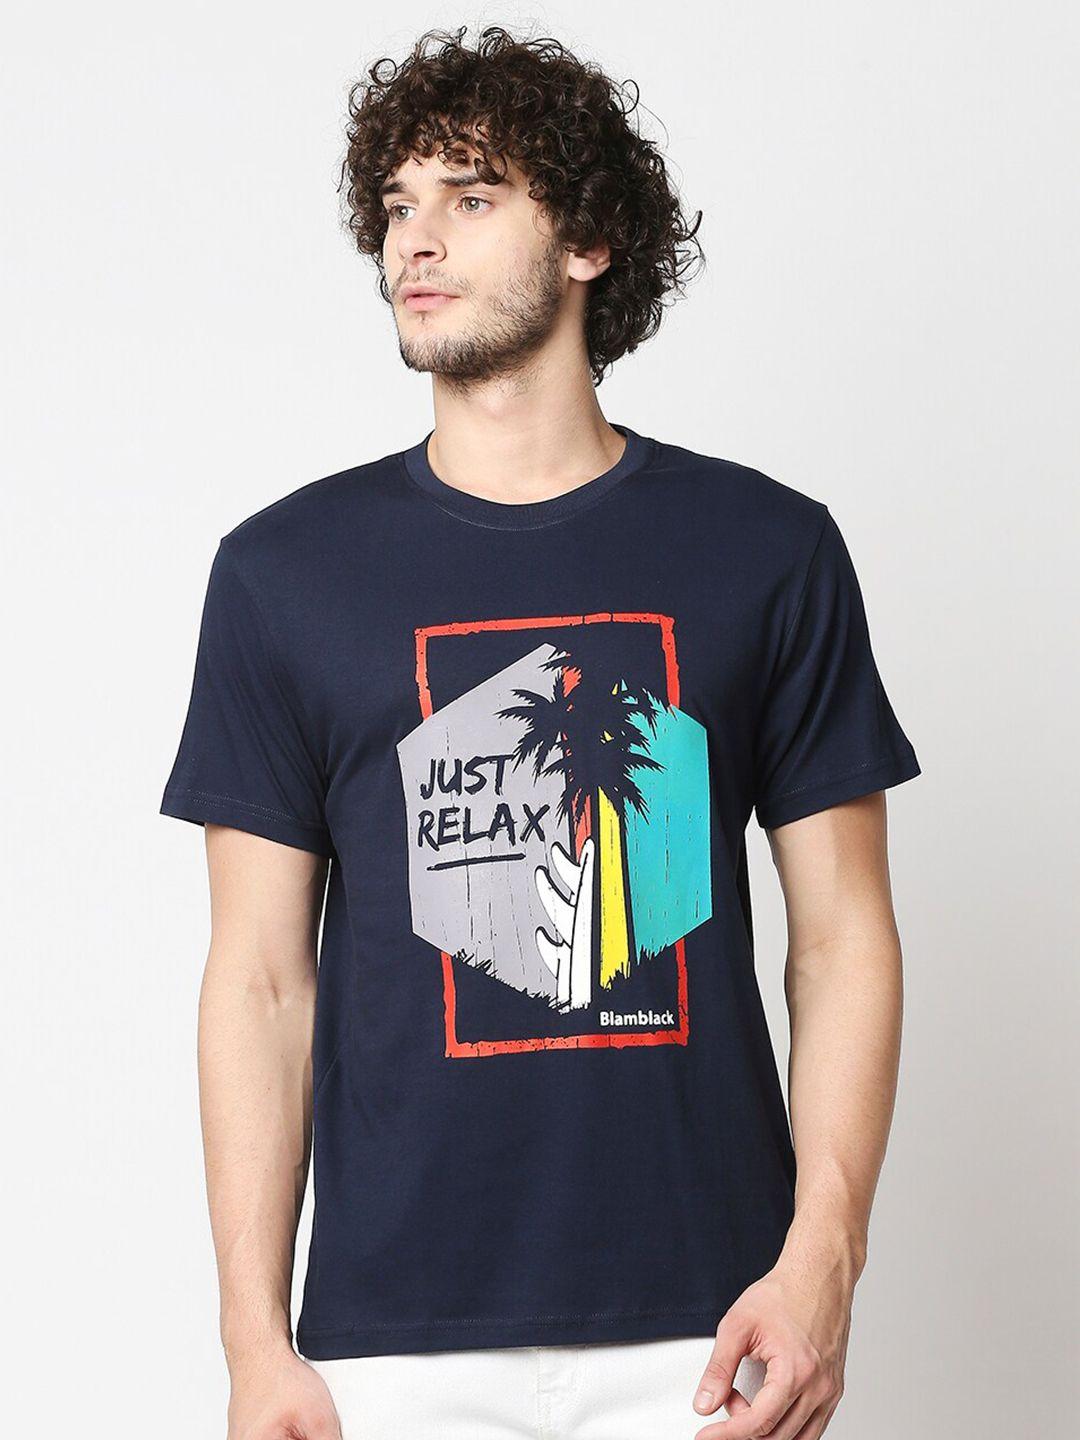 blamblack men navy blue printed t-shirt